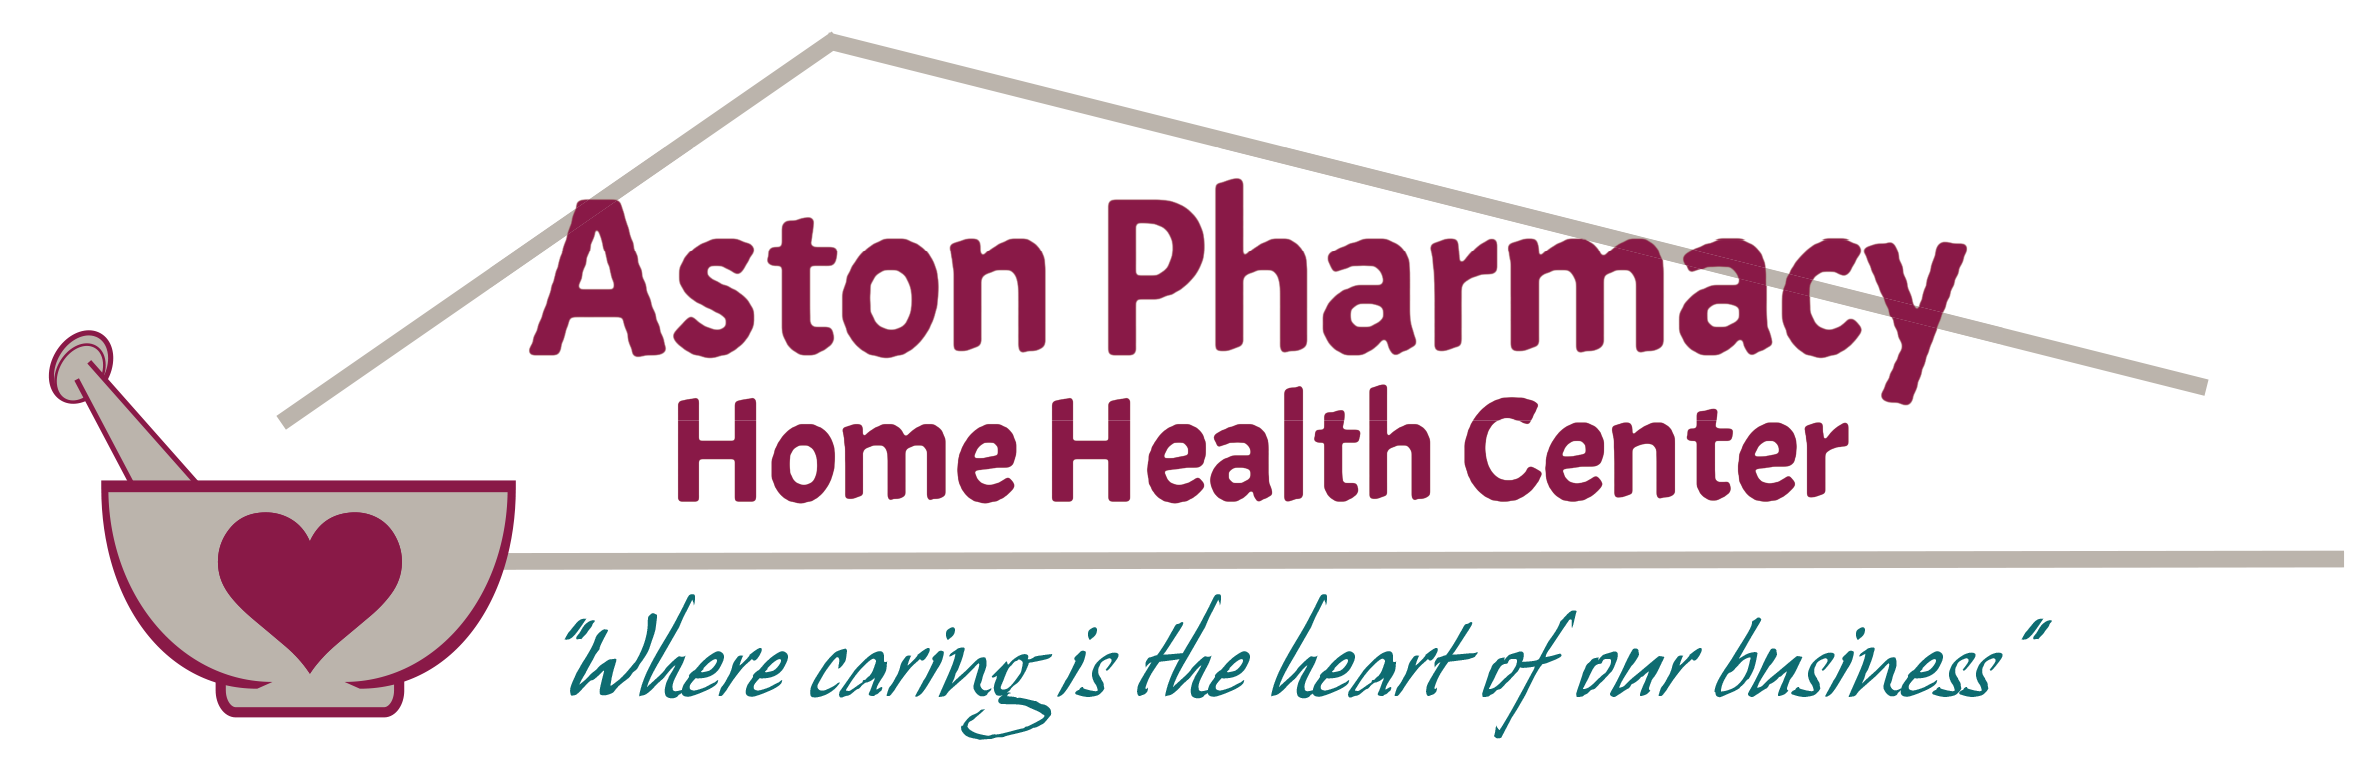 Aston Pharmacy Home Health Center